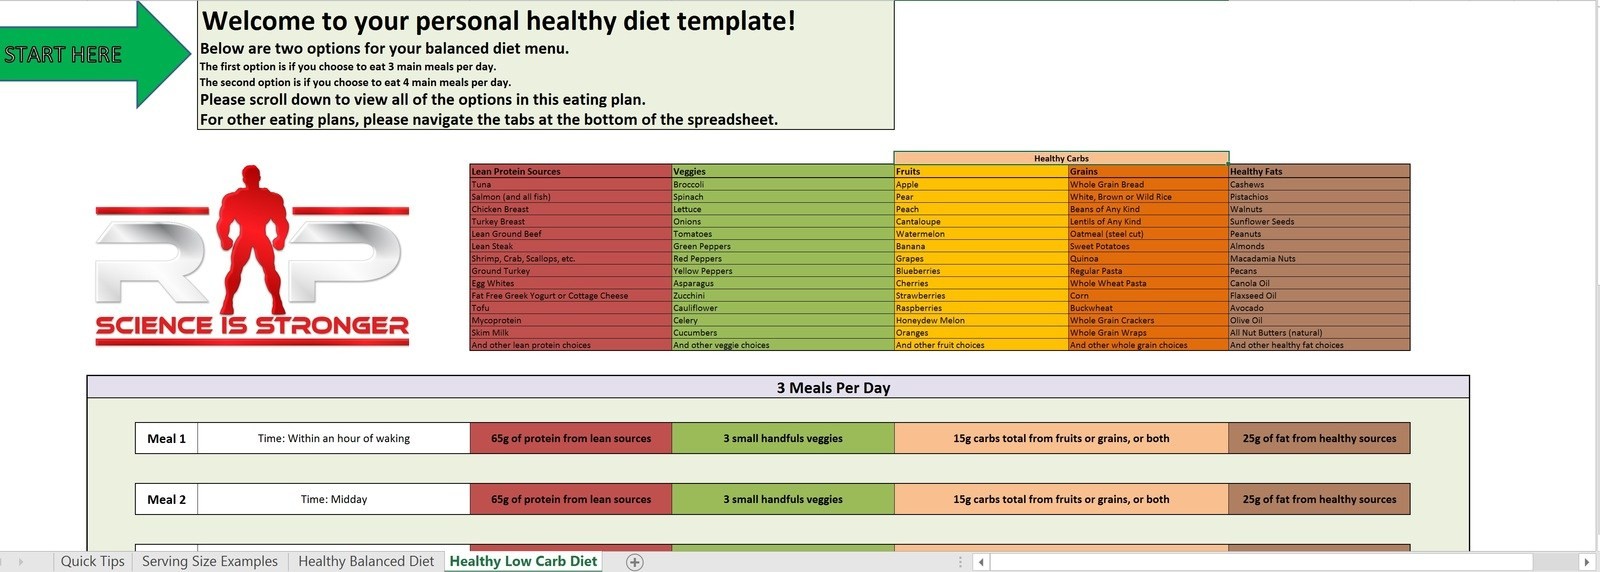 Renaissance Periodization Healthy Diet Templates Auto Download